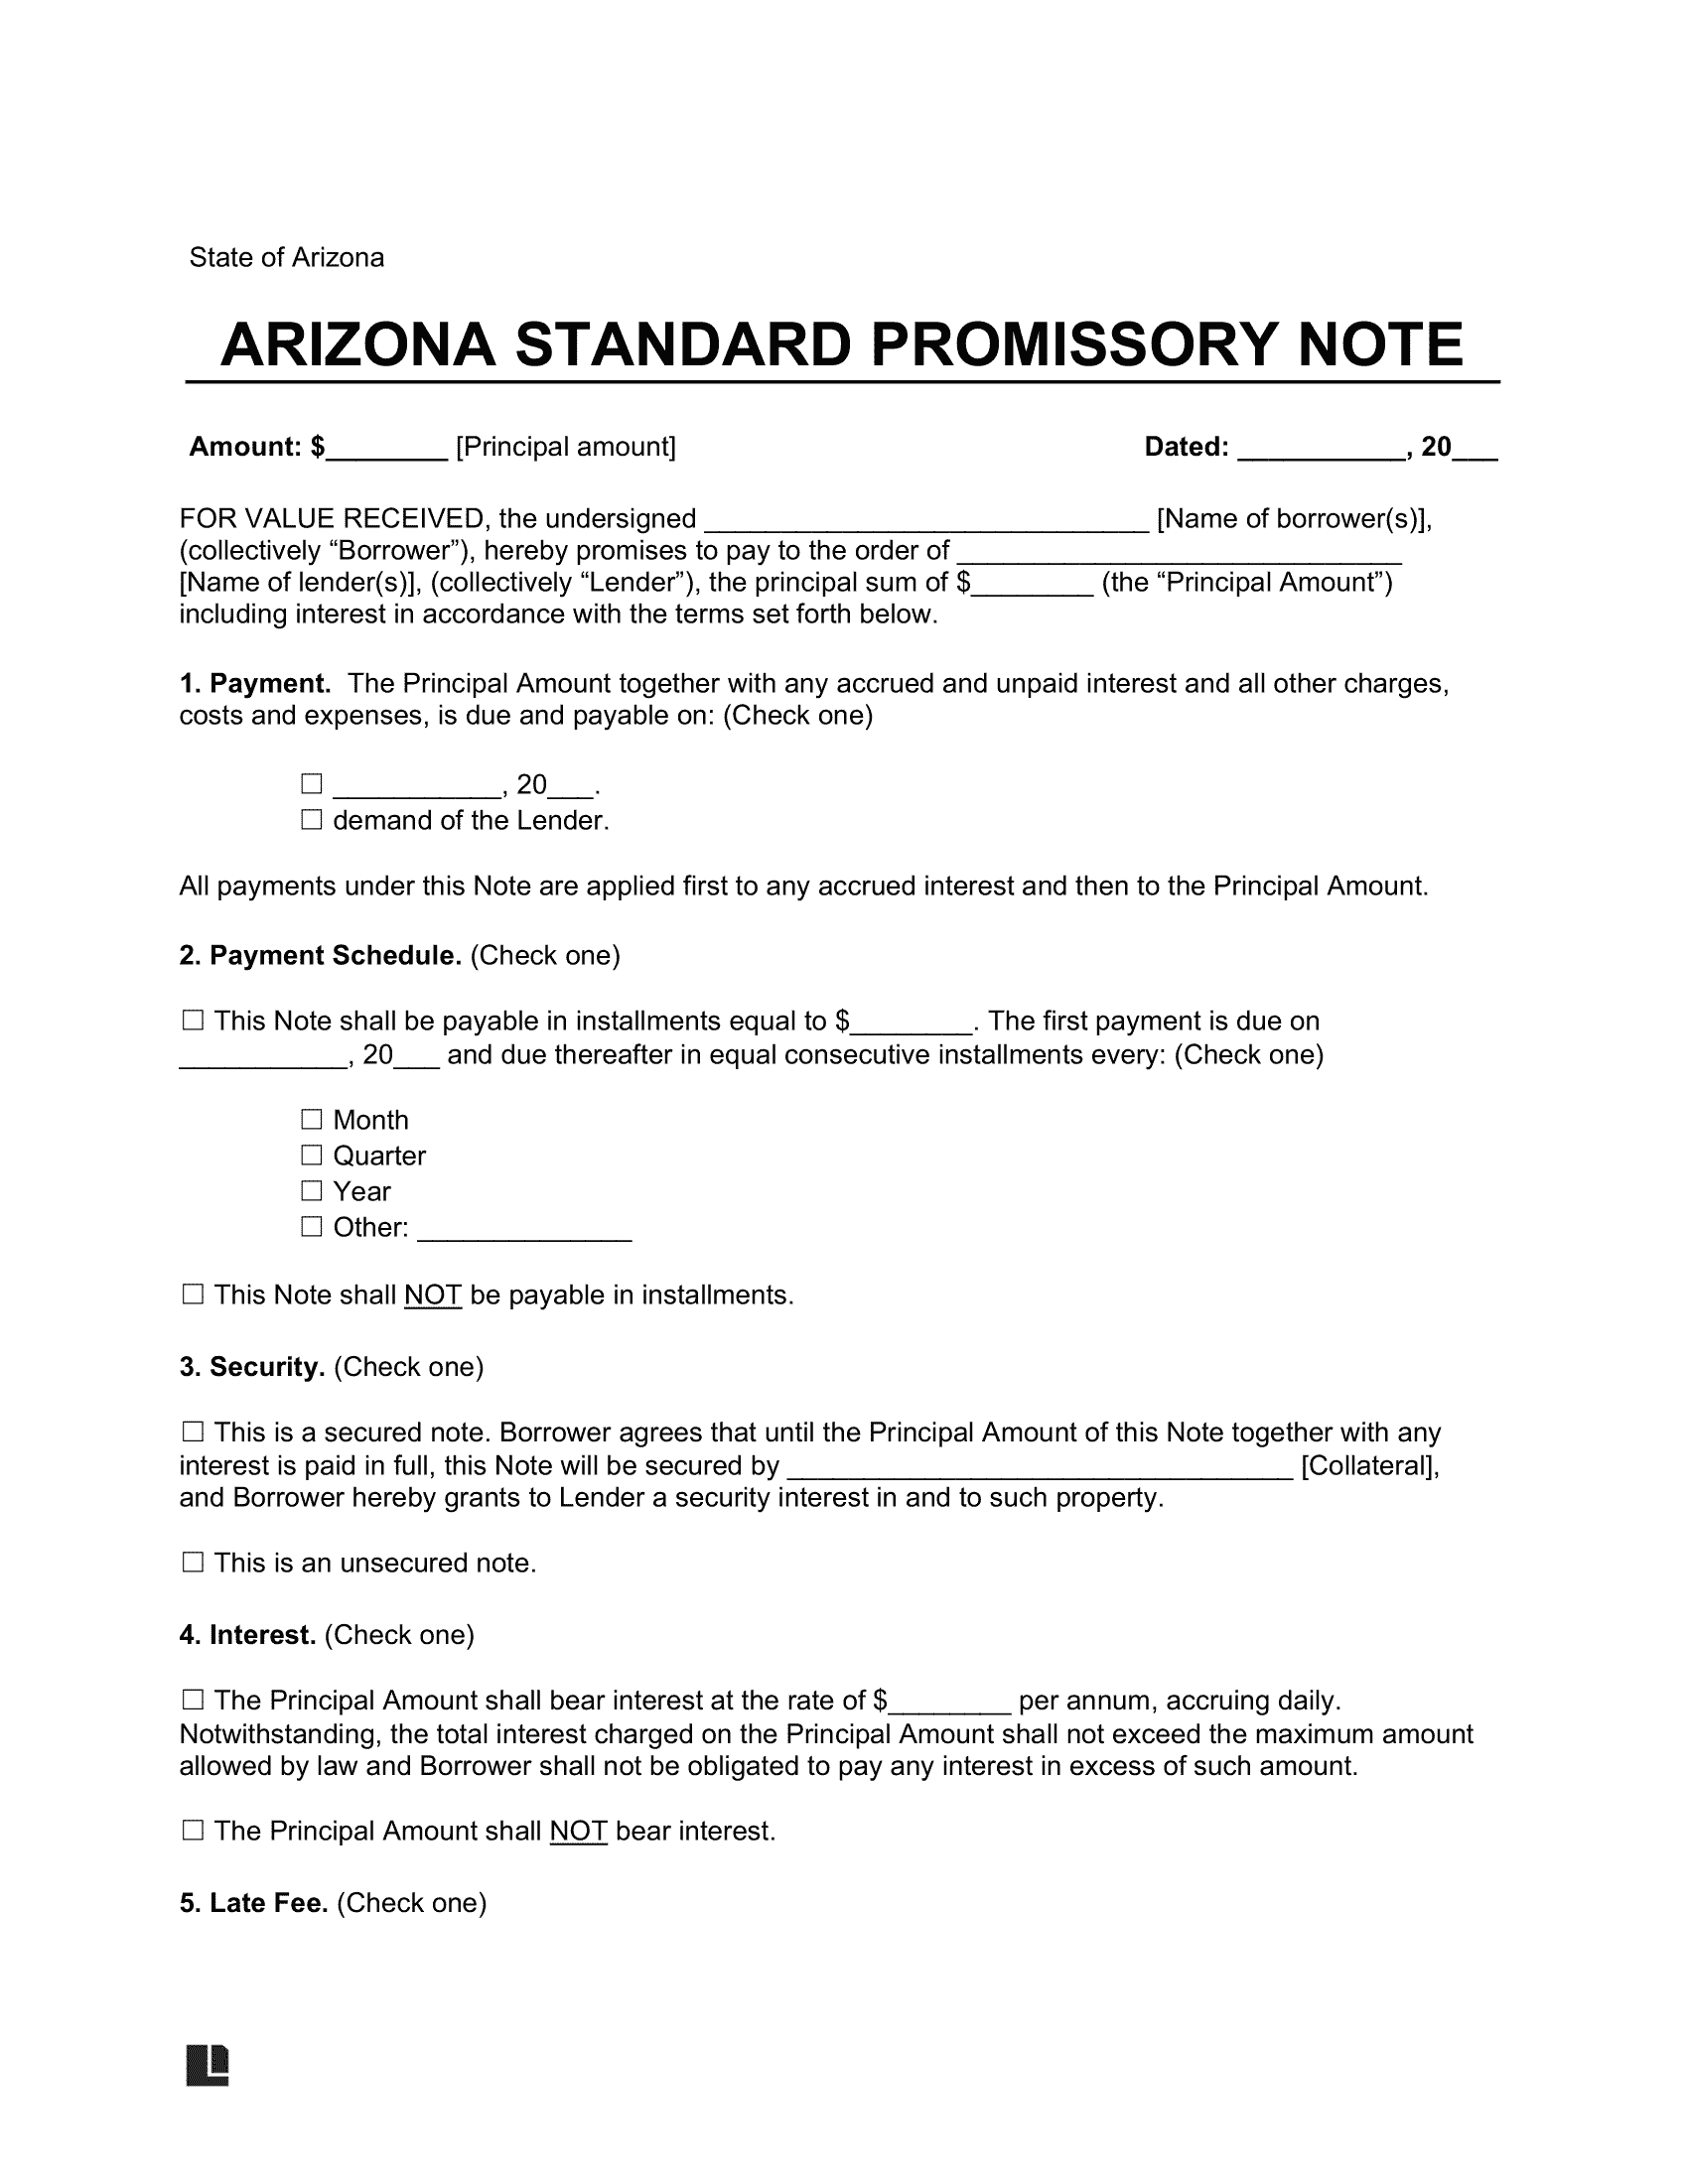 Arizona Standard Promissory Note Template